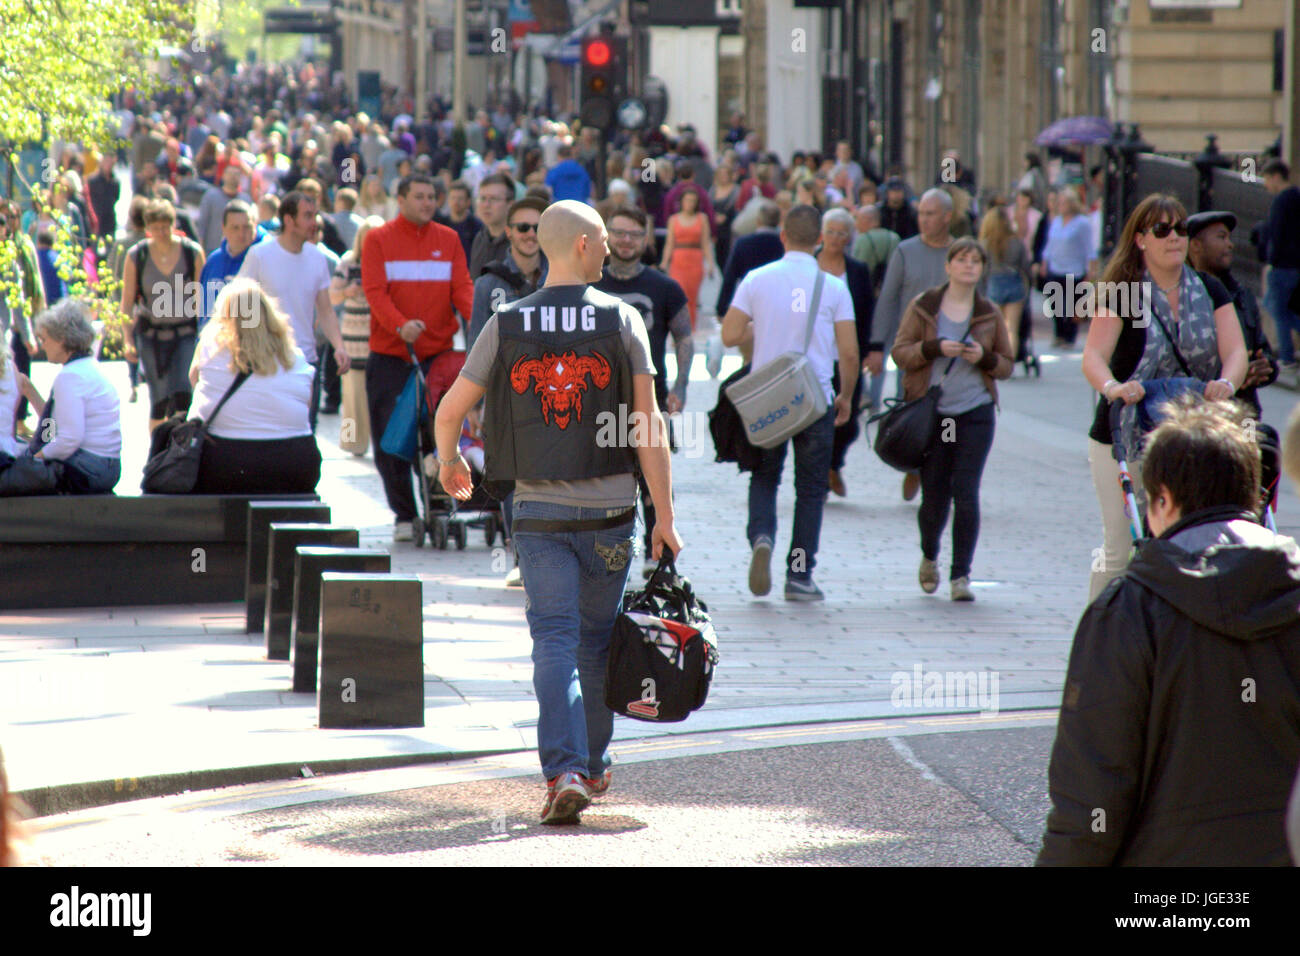 Glasgow street Buchanan Street shoppers thug bikers jacket emblem design sunny day Stock Photo